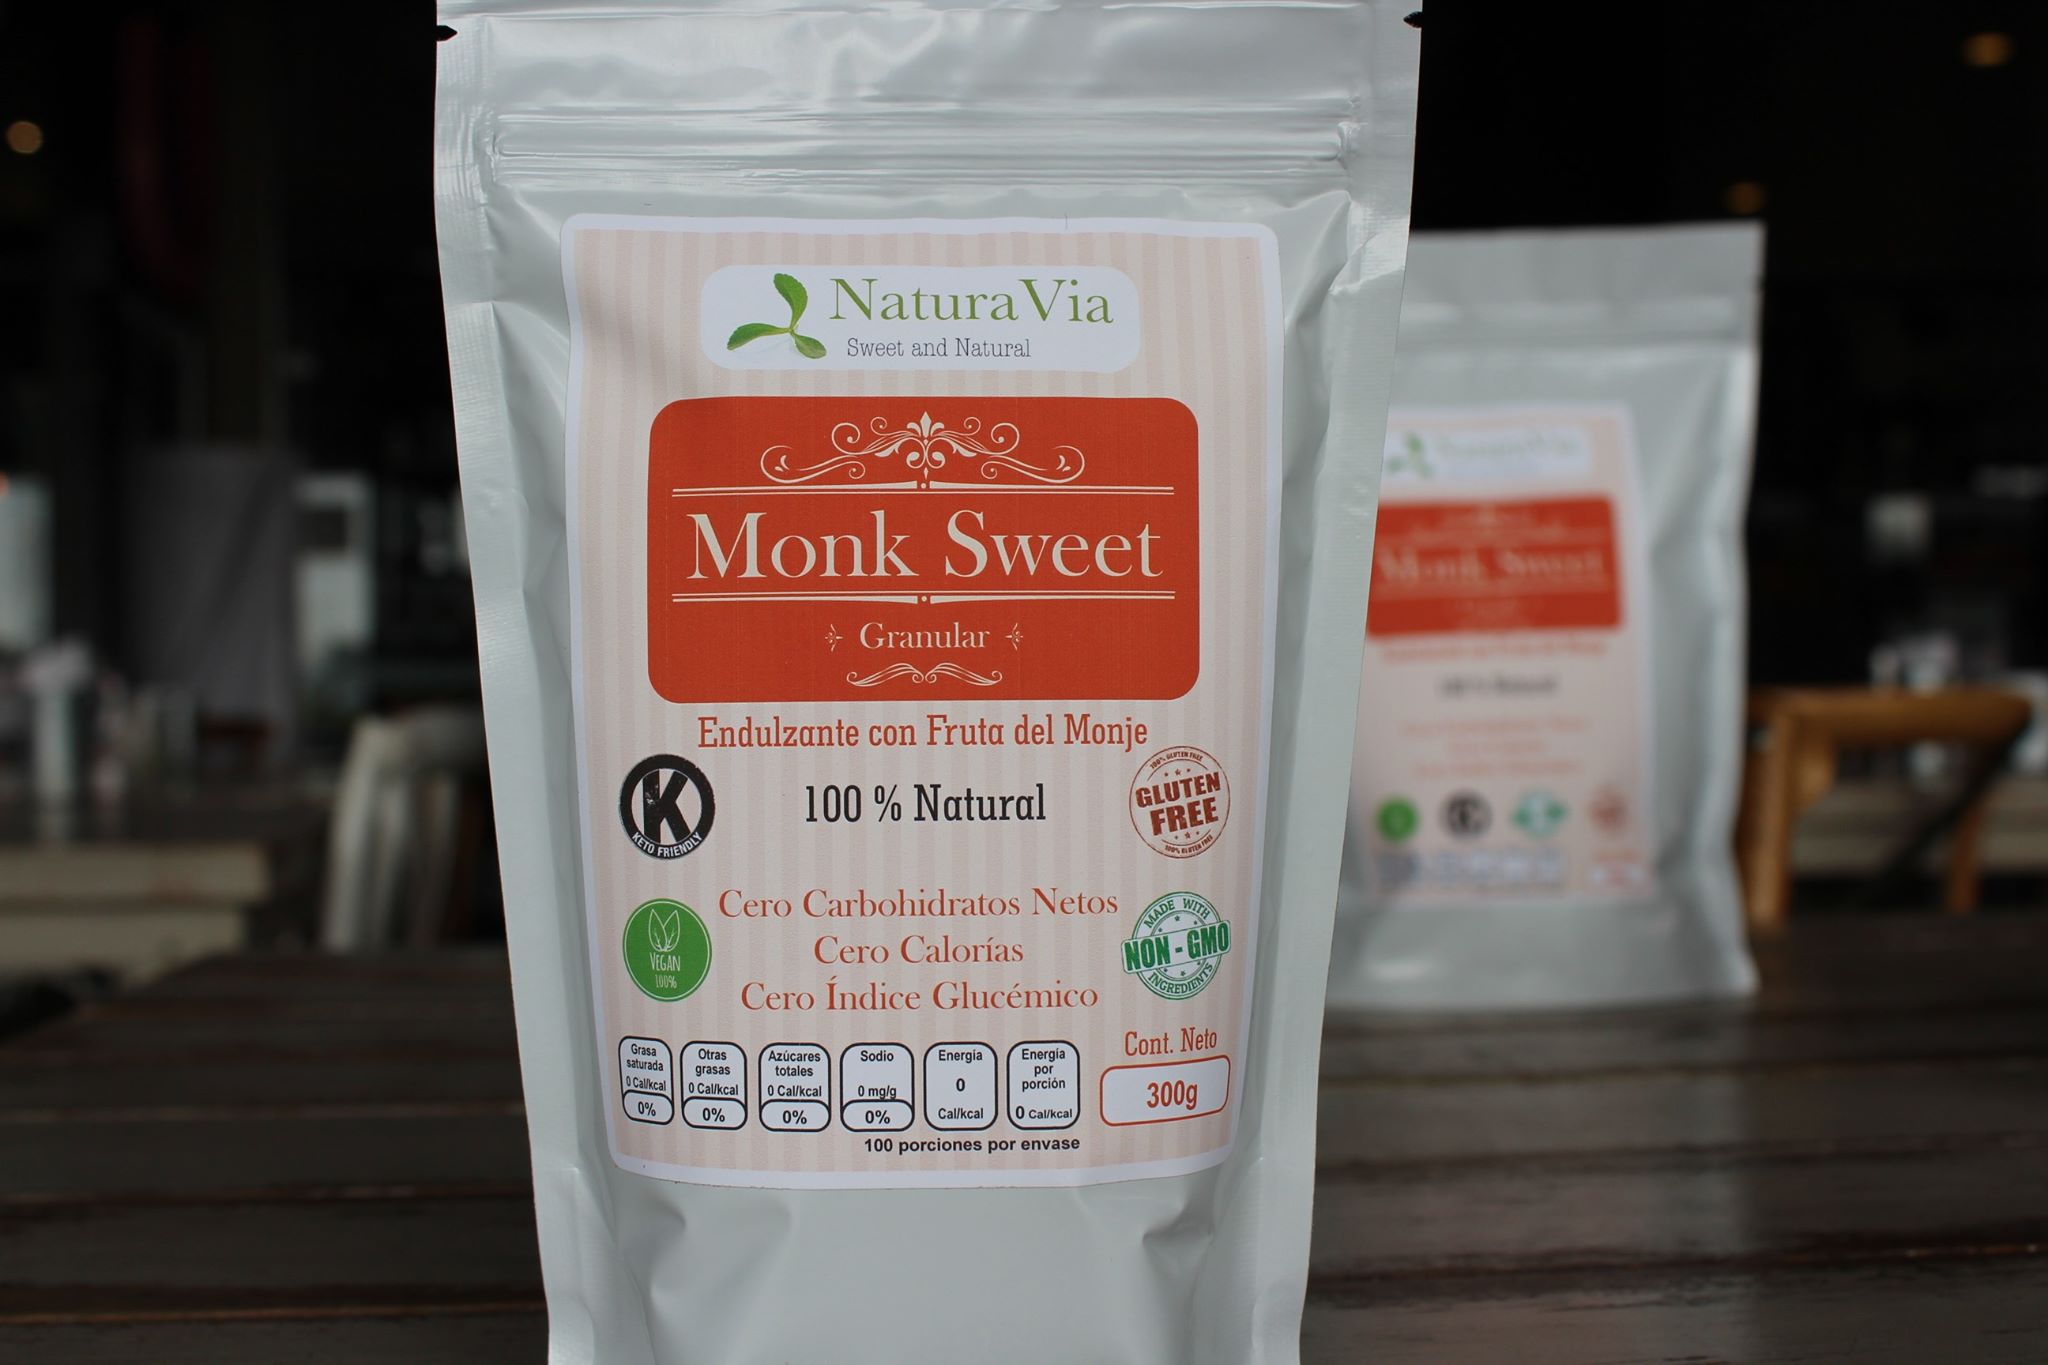 Monk Sweet Granular nueva imagen